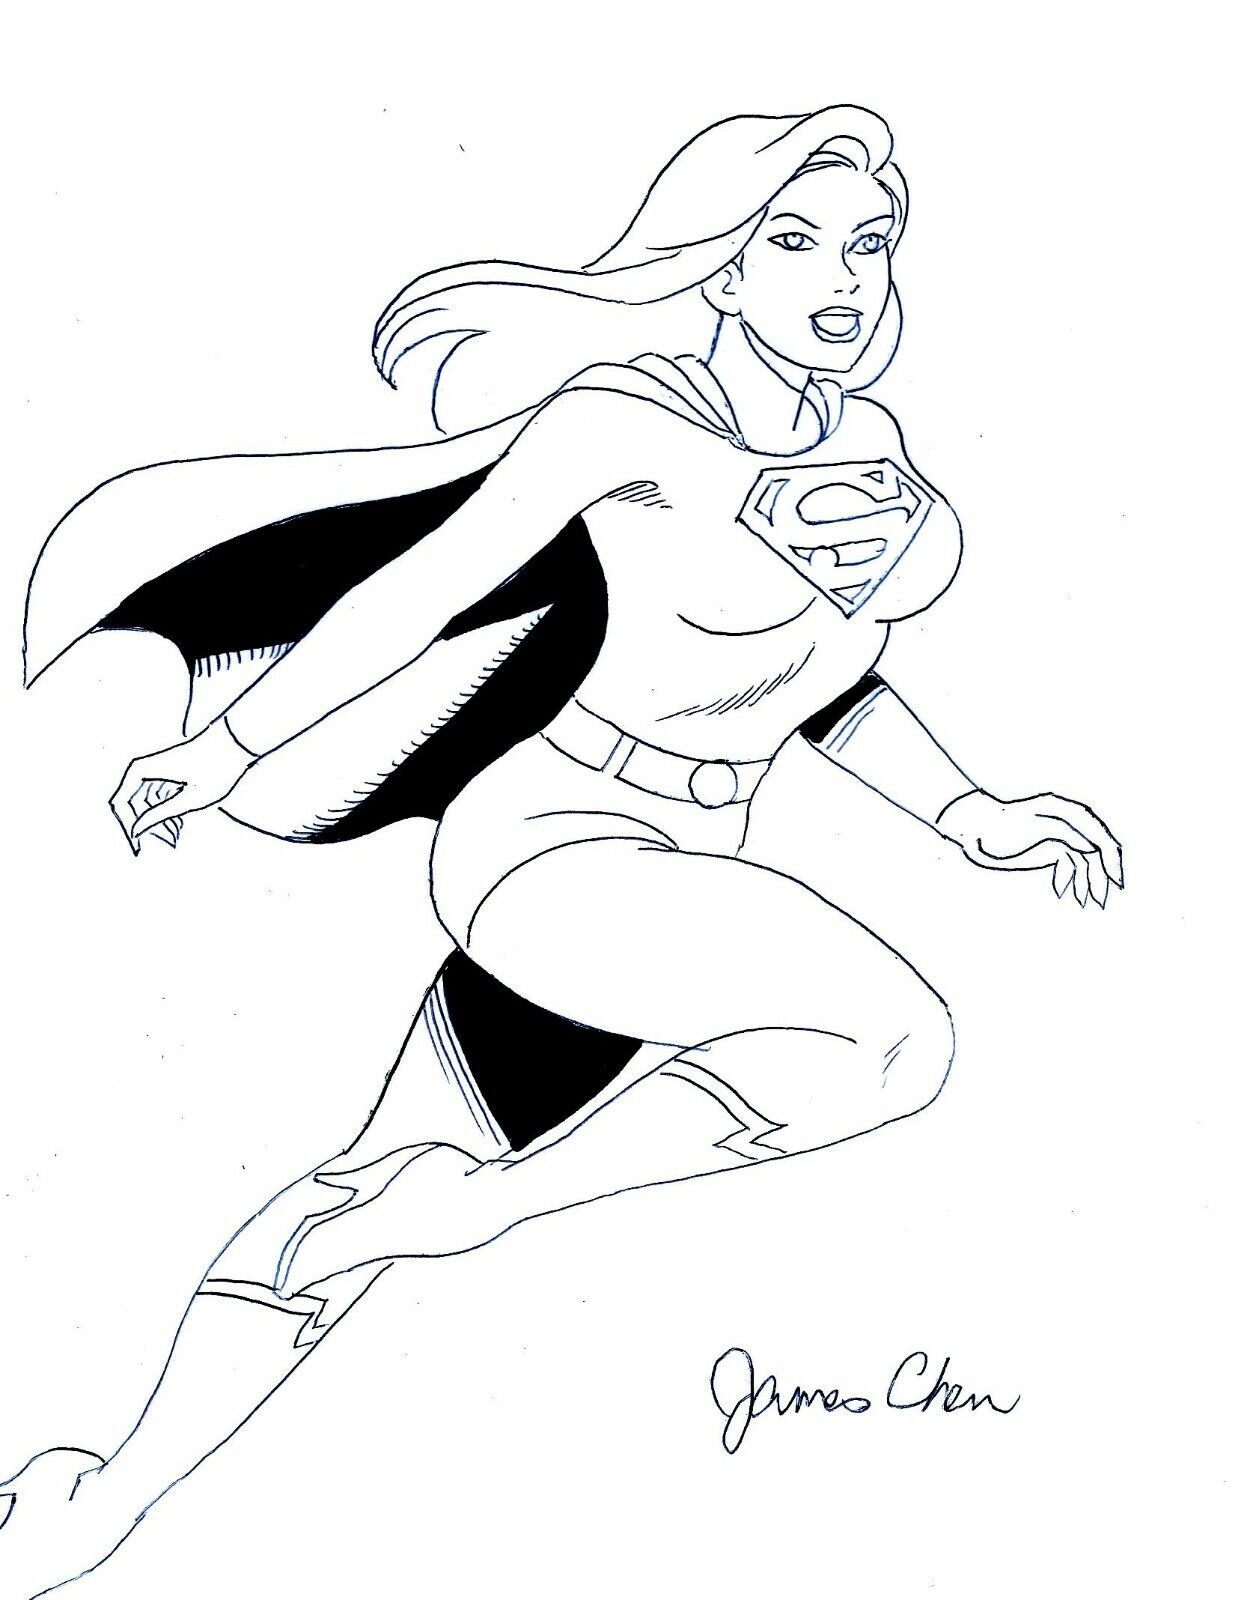 Supergirl original comic art black ink sketch on rd stock by james chen